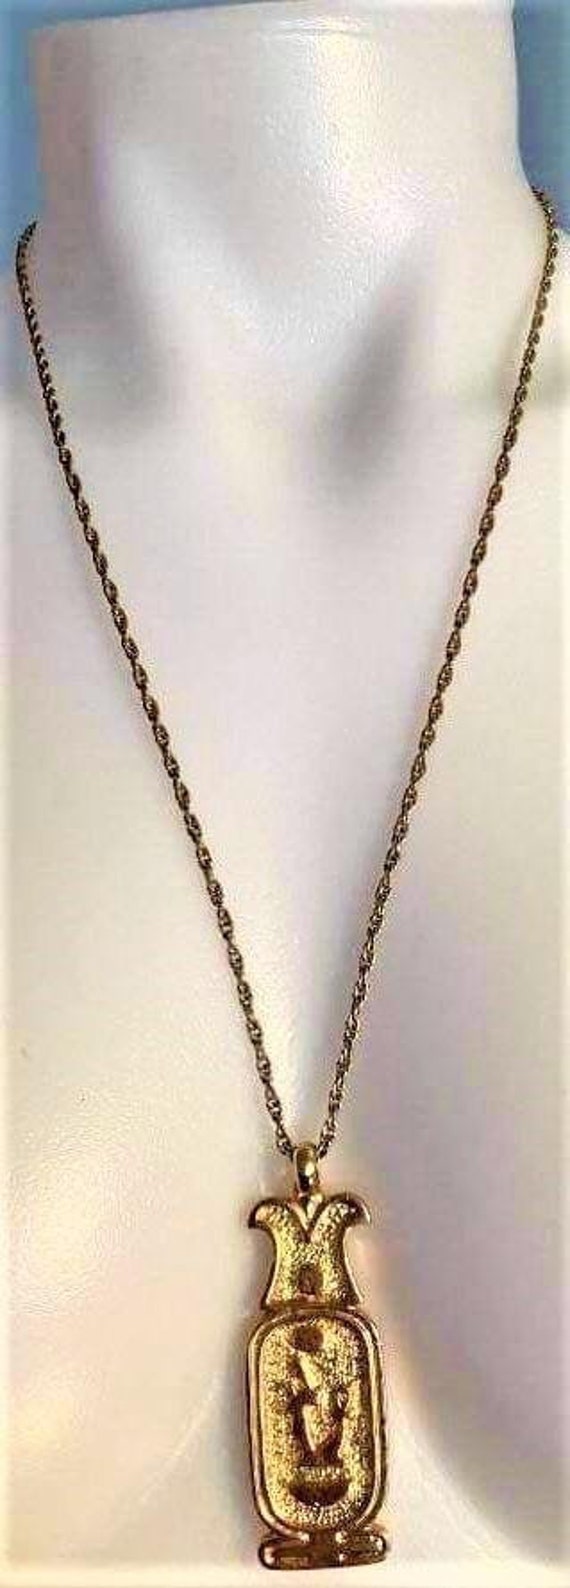 Vintage Egyptian Revival pendant necklace hierogly